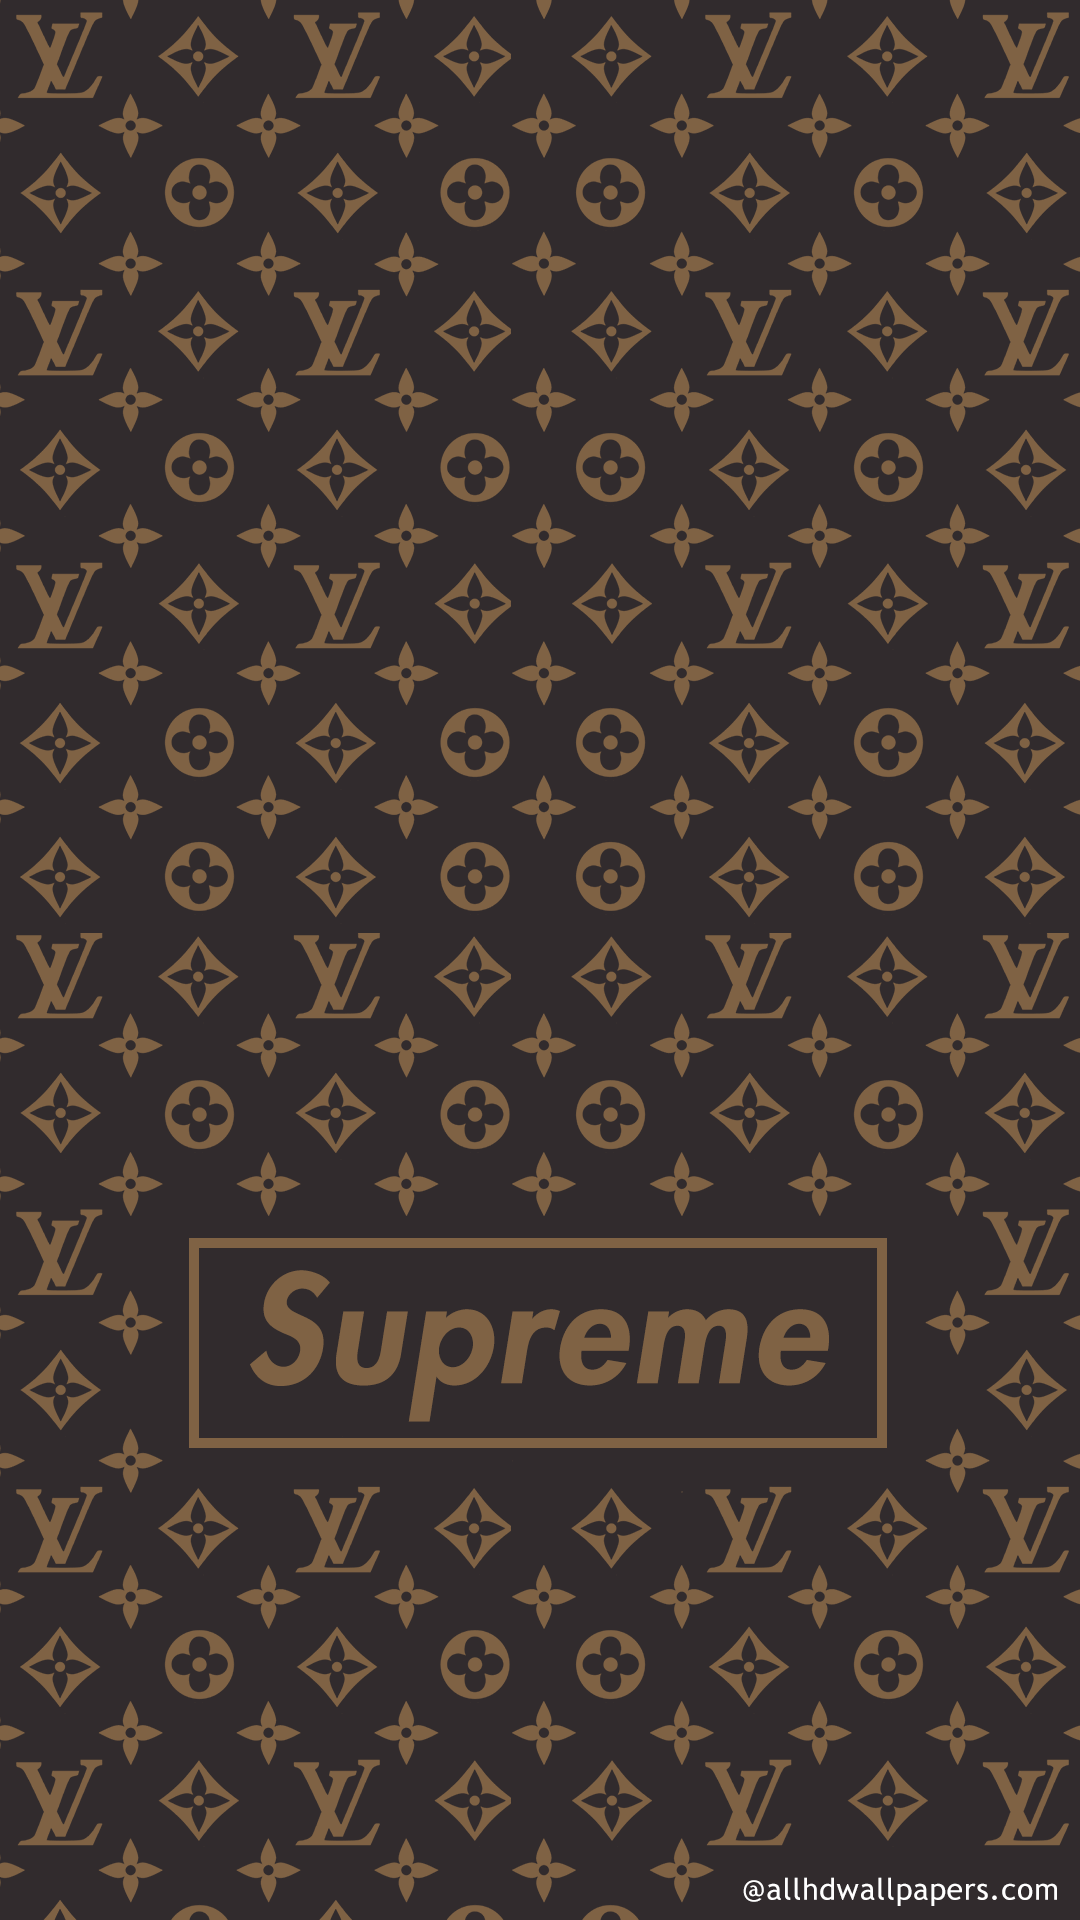 Supreme Wallpaper in 4K. Supreme iphone wallpaper, Supreme wallpaper, Supreme wallpaper iphone 6